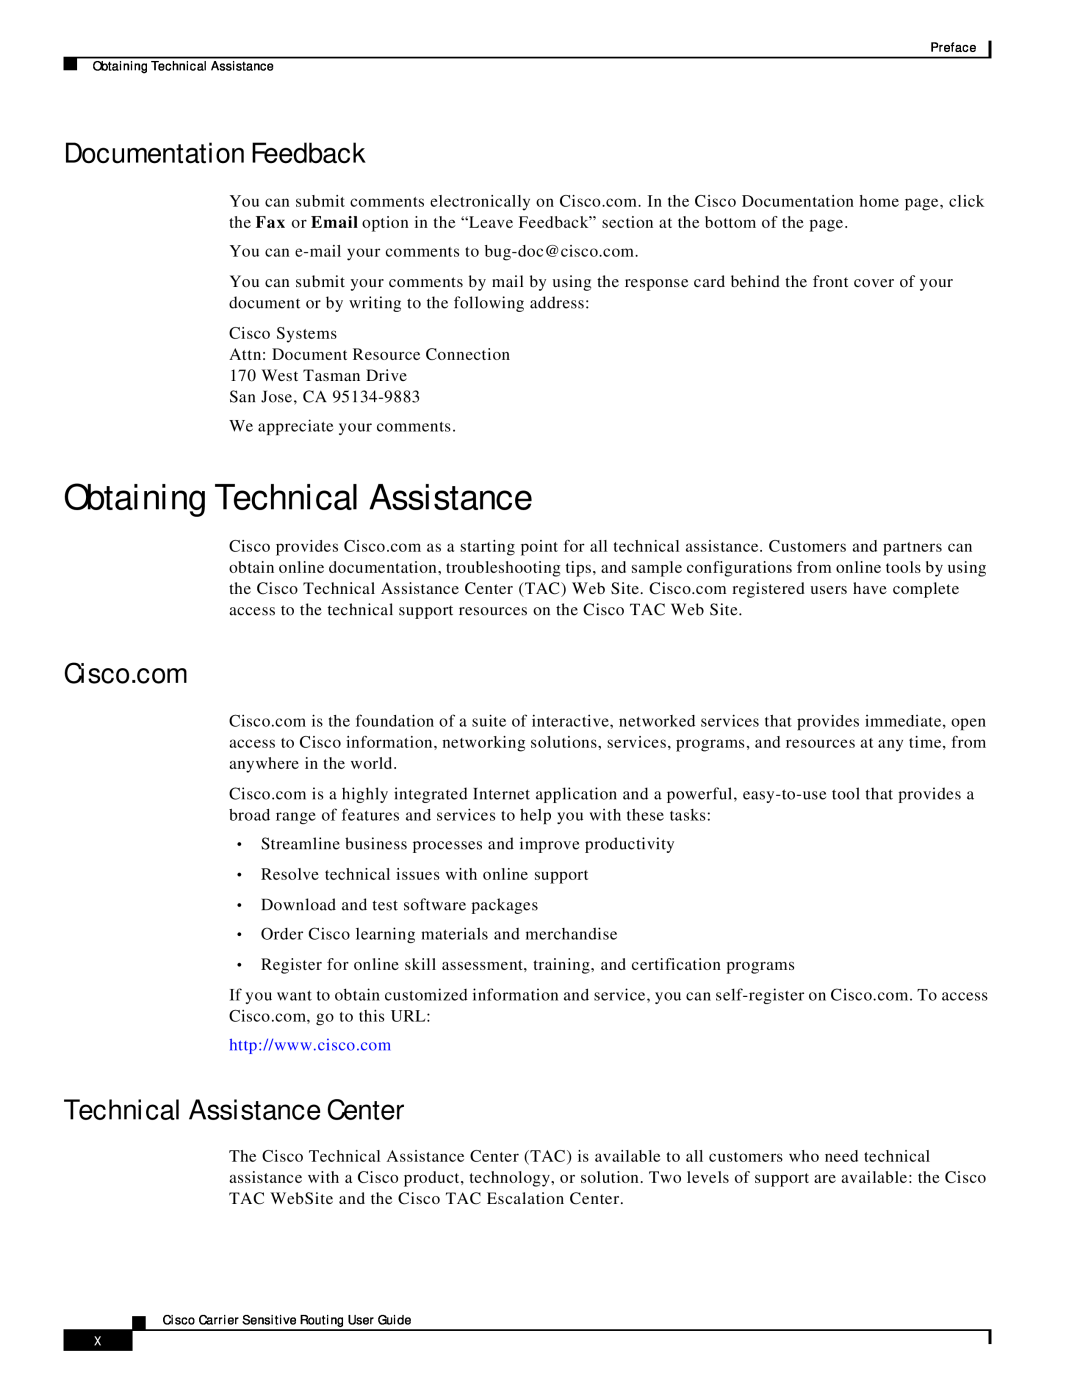 Cisco Systems Version 1.1 Obtaining Technical Assistance, Documentation Feedback, Cisco.com, Technical Assistance Center 